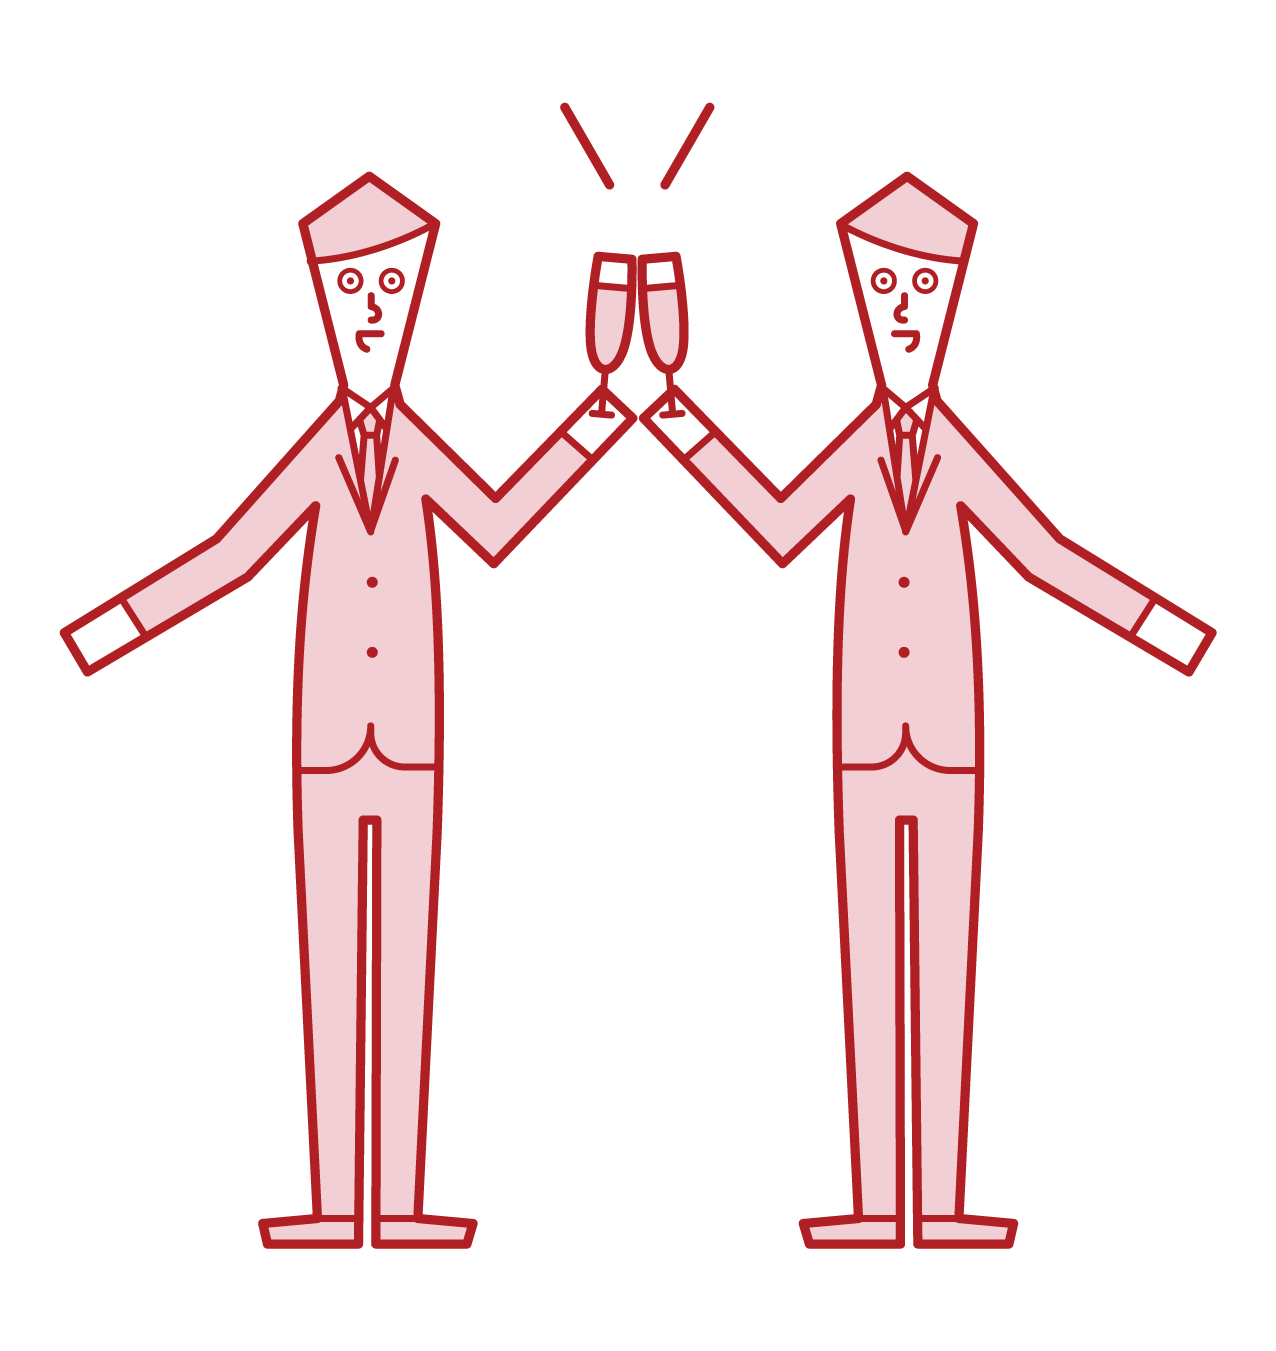 Illustration of people (men) toasting